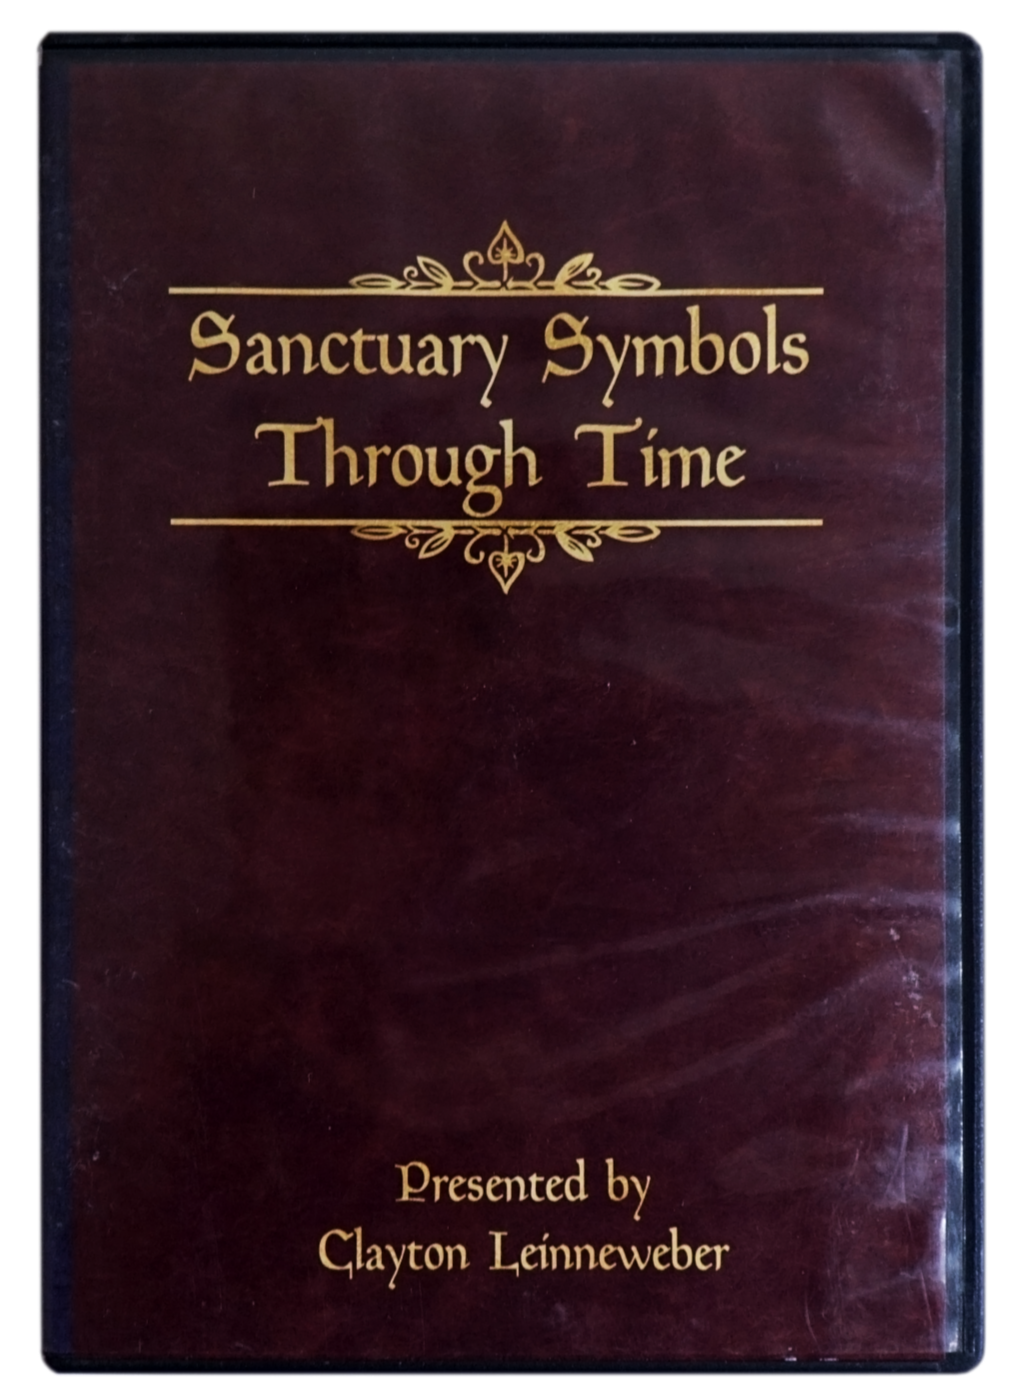 Sanctuary Symbols Through Time DVD Series